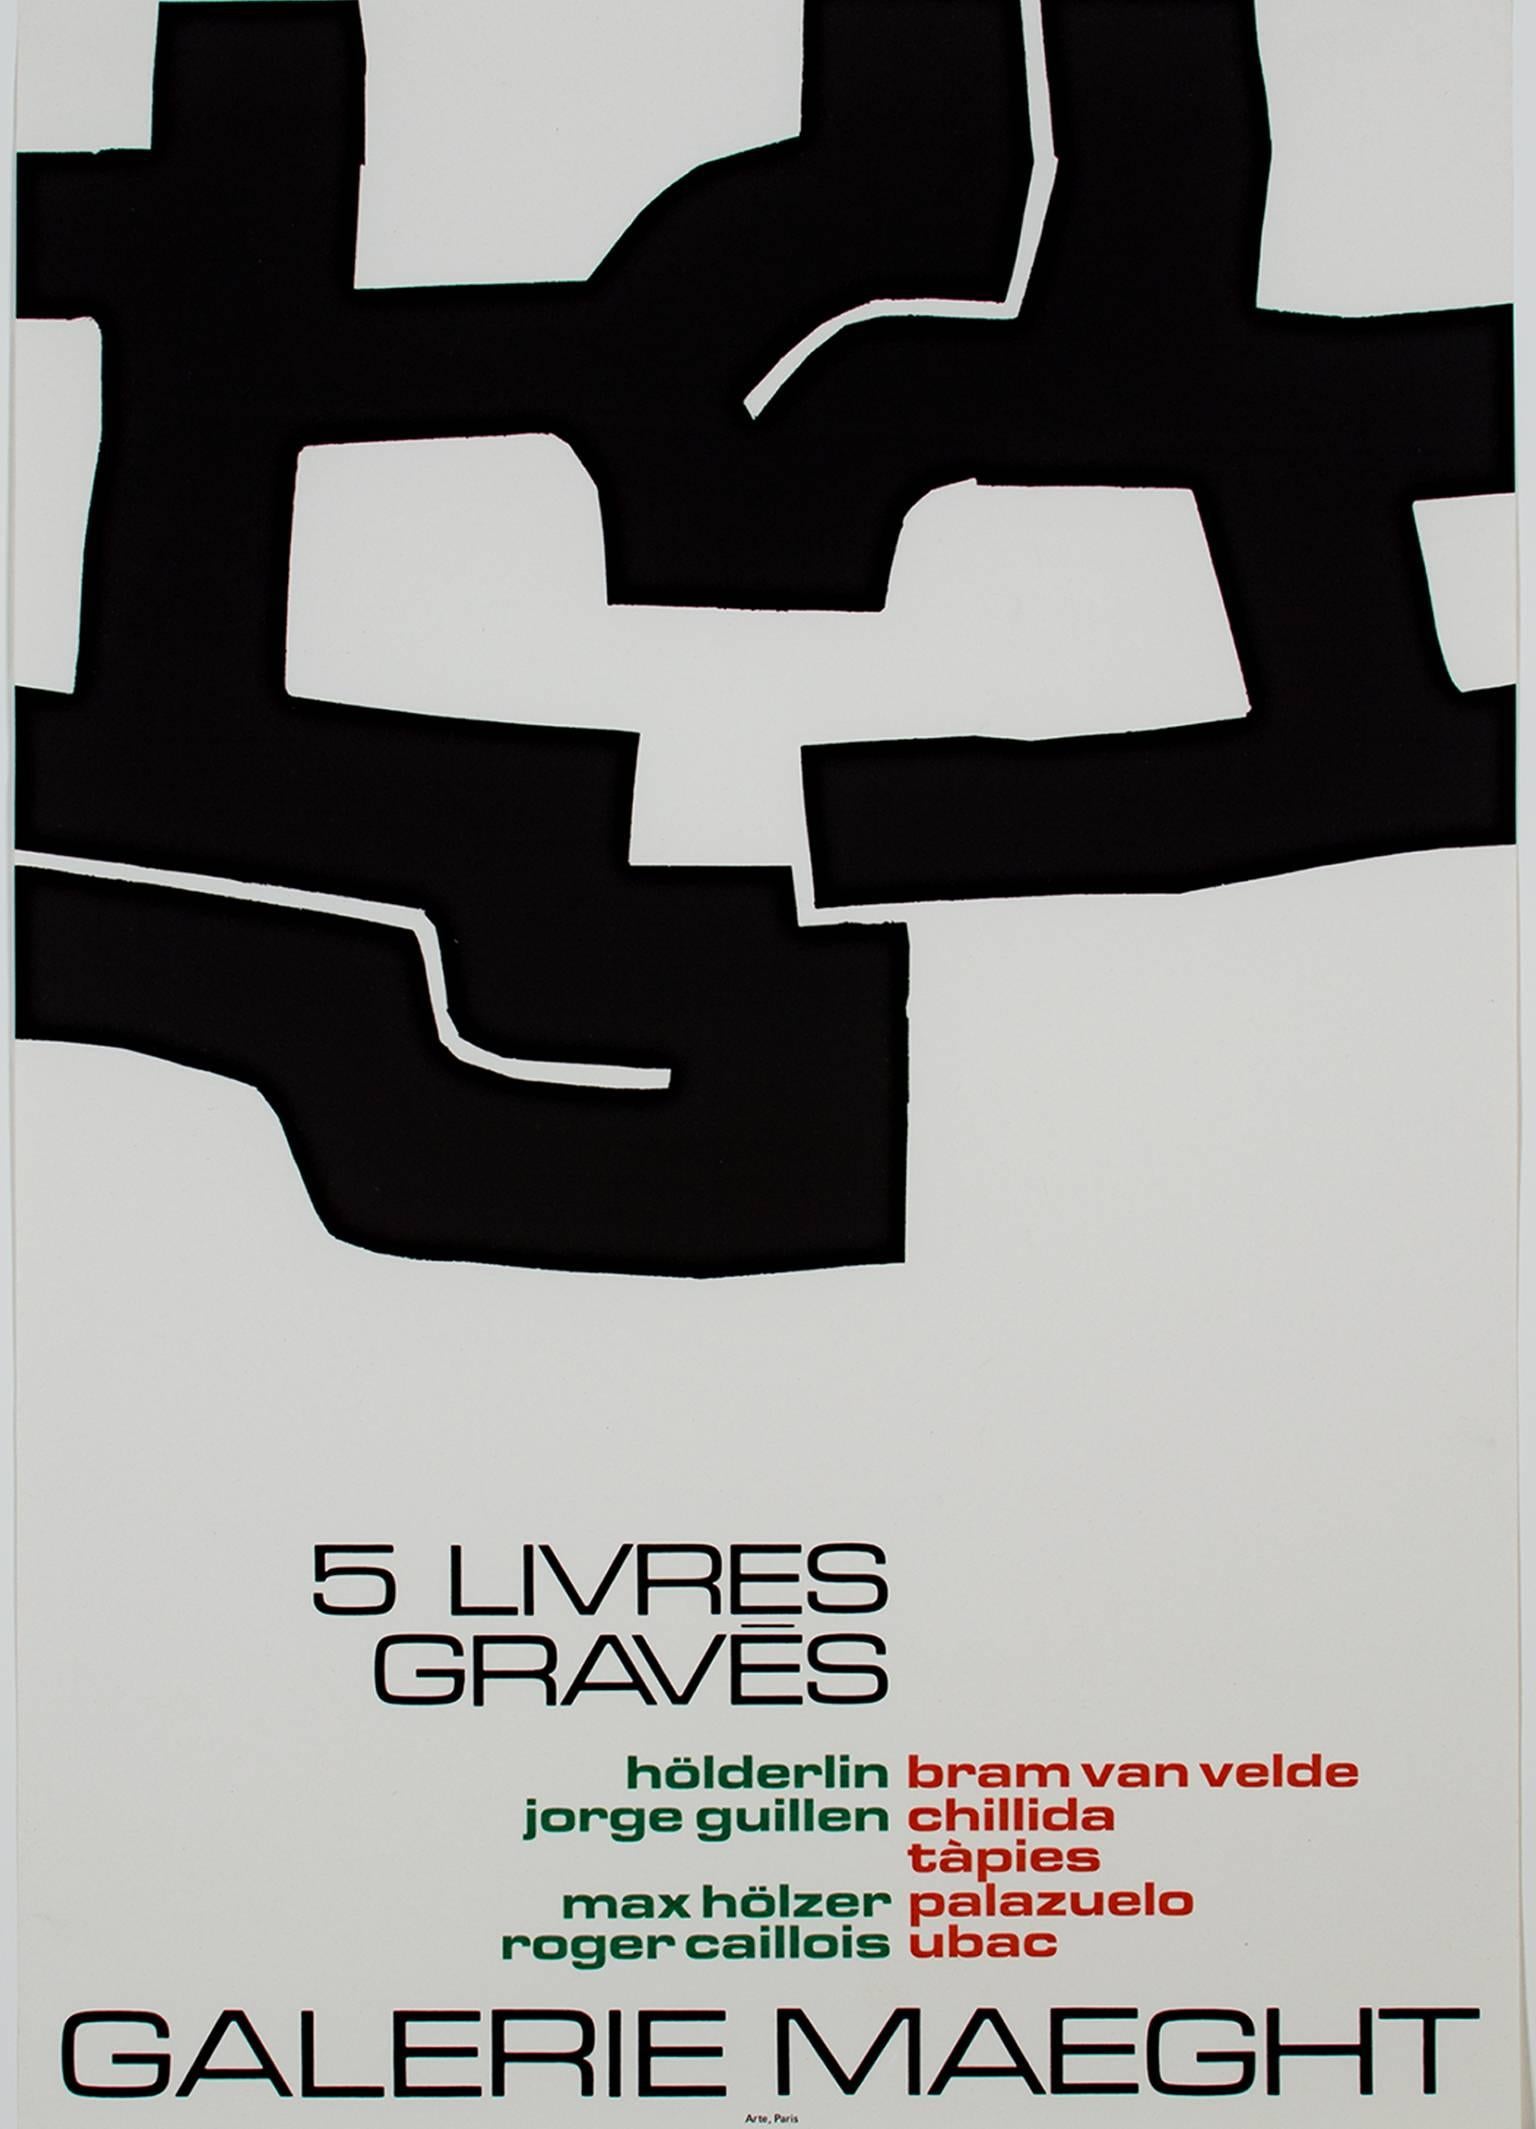 "Galerie Maeght-5 Livres Graves," Original Lithograph Poster by Eduardo Chillida